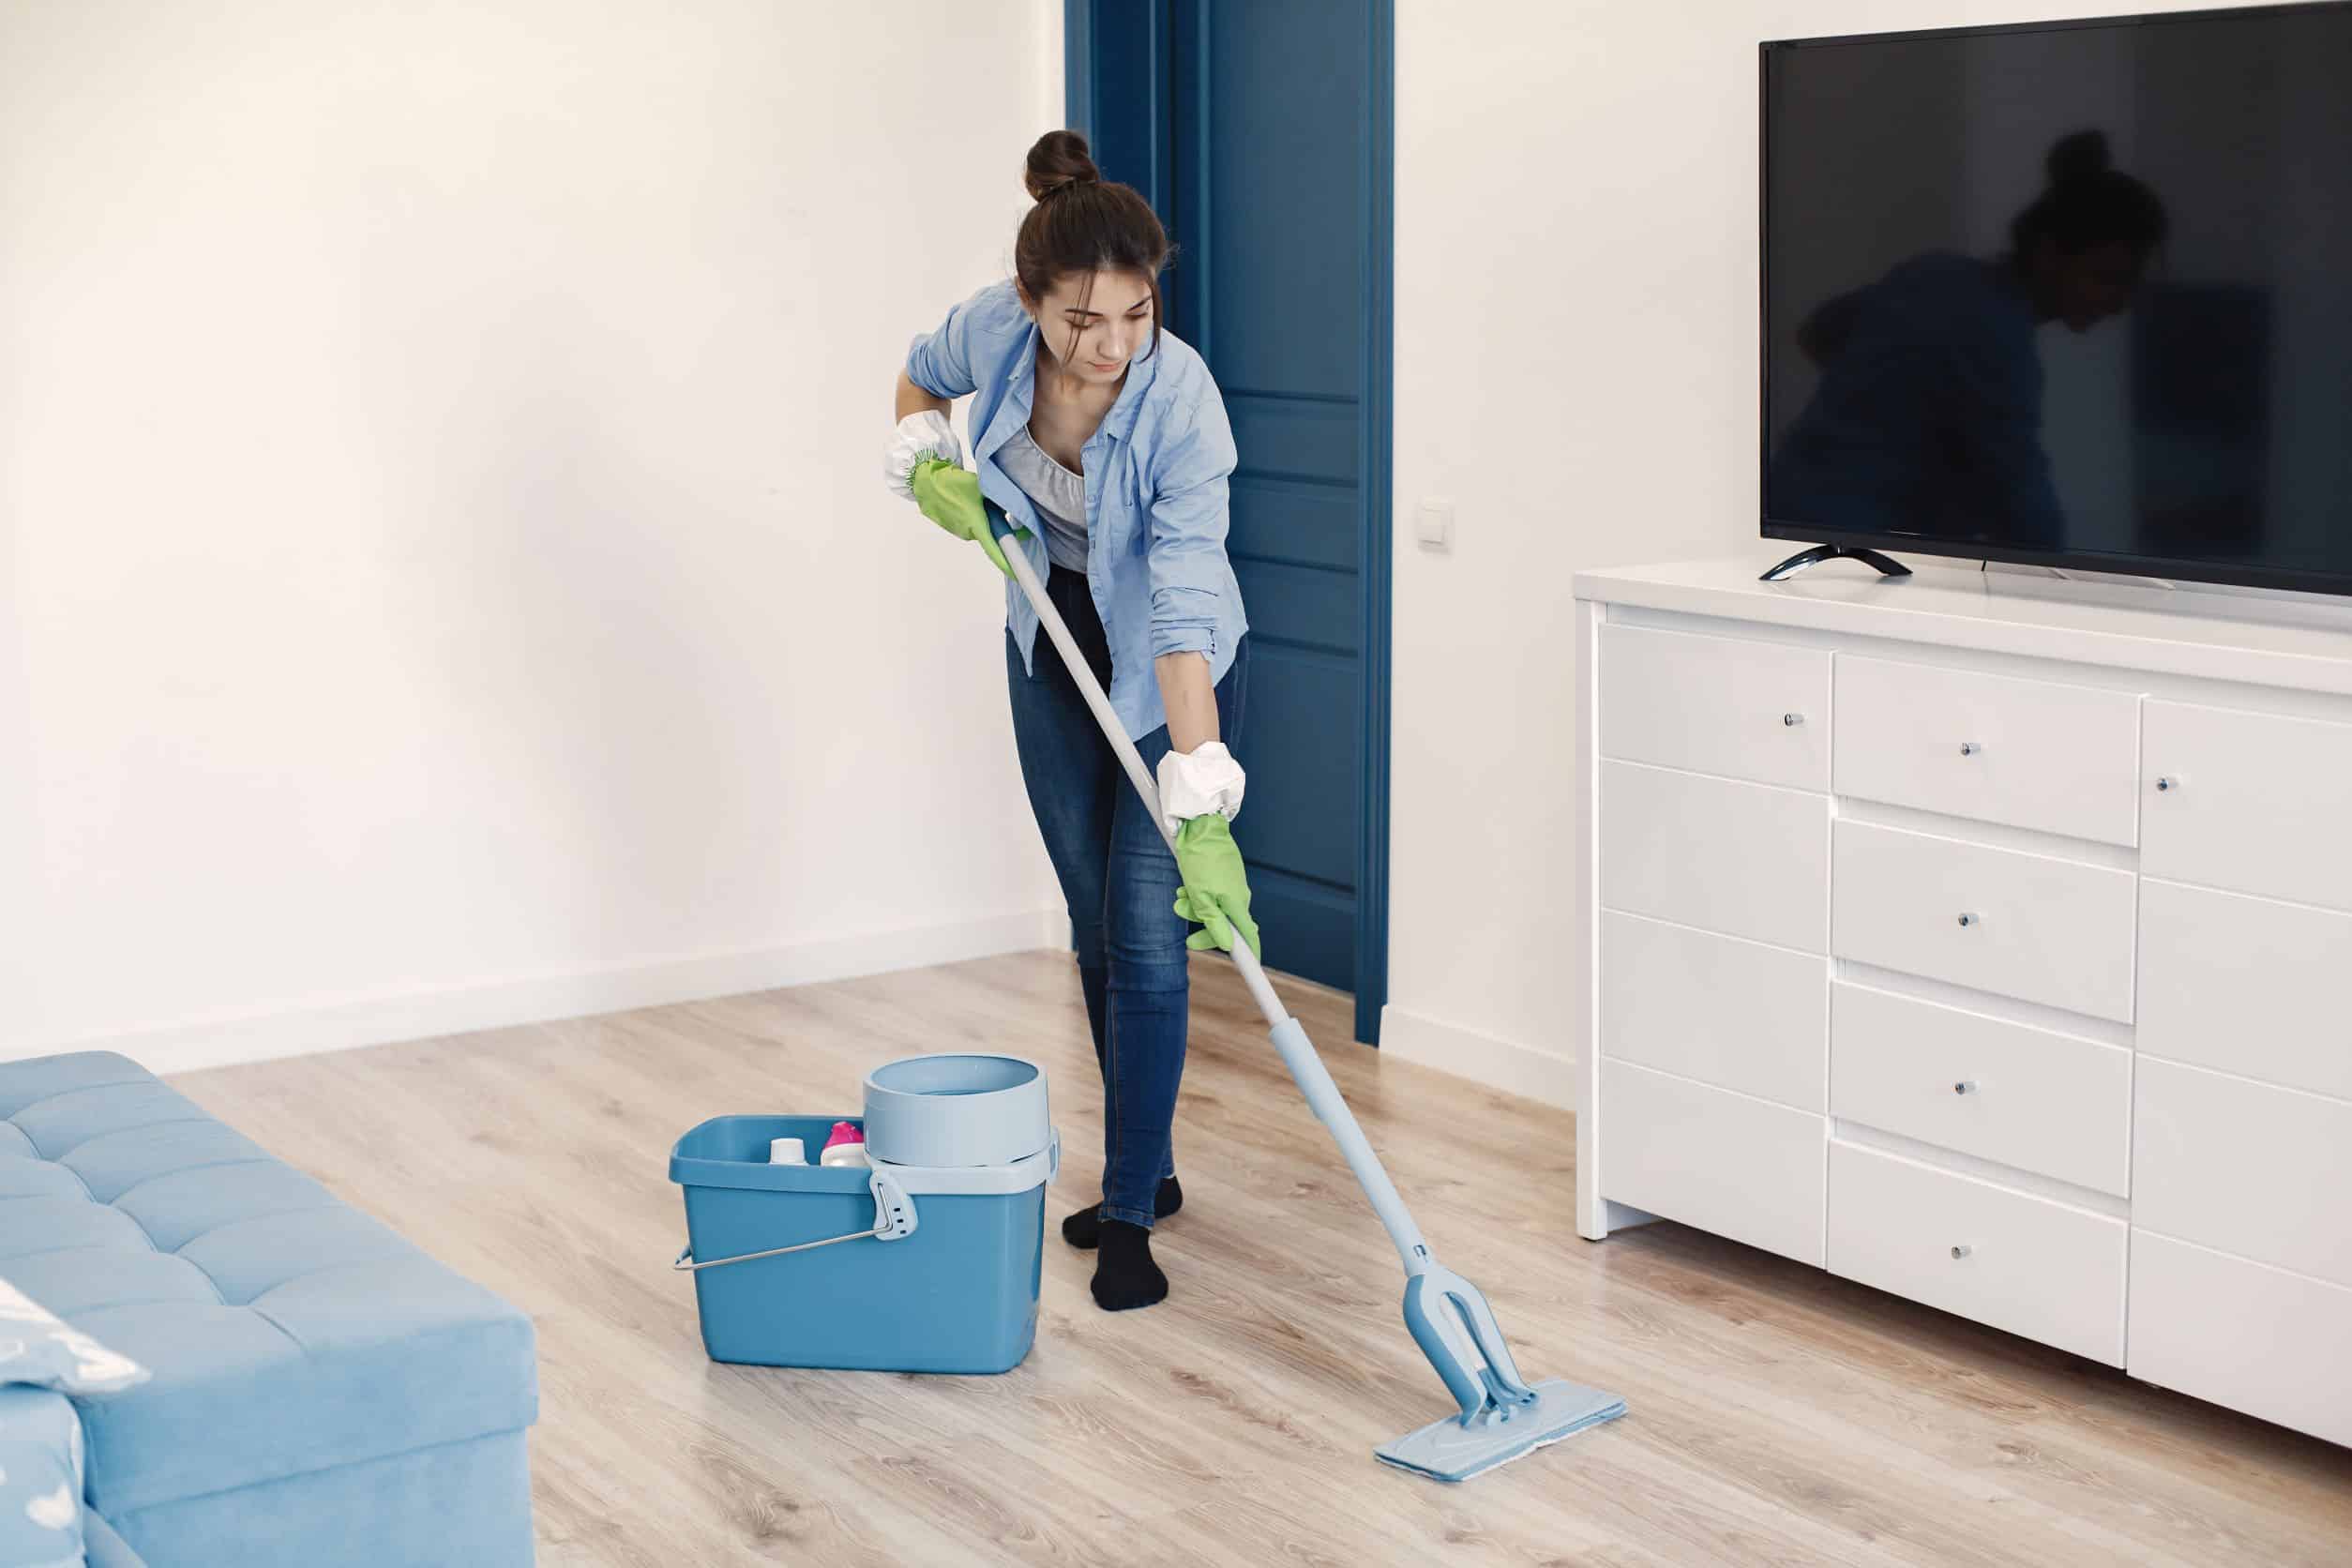 housewife-woking-home-lady-blue-shirt-woman-clean-floor